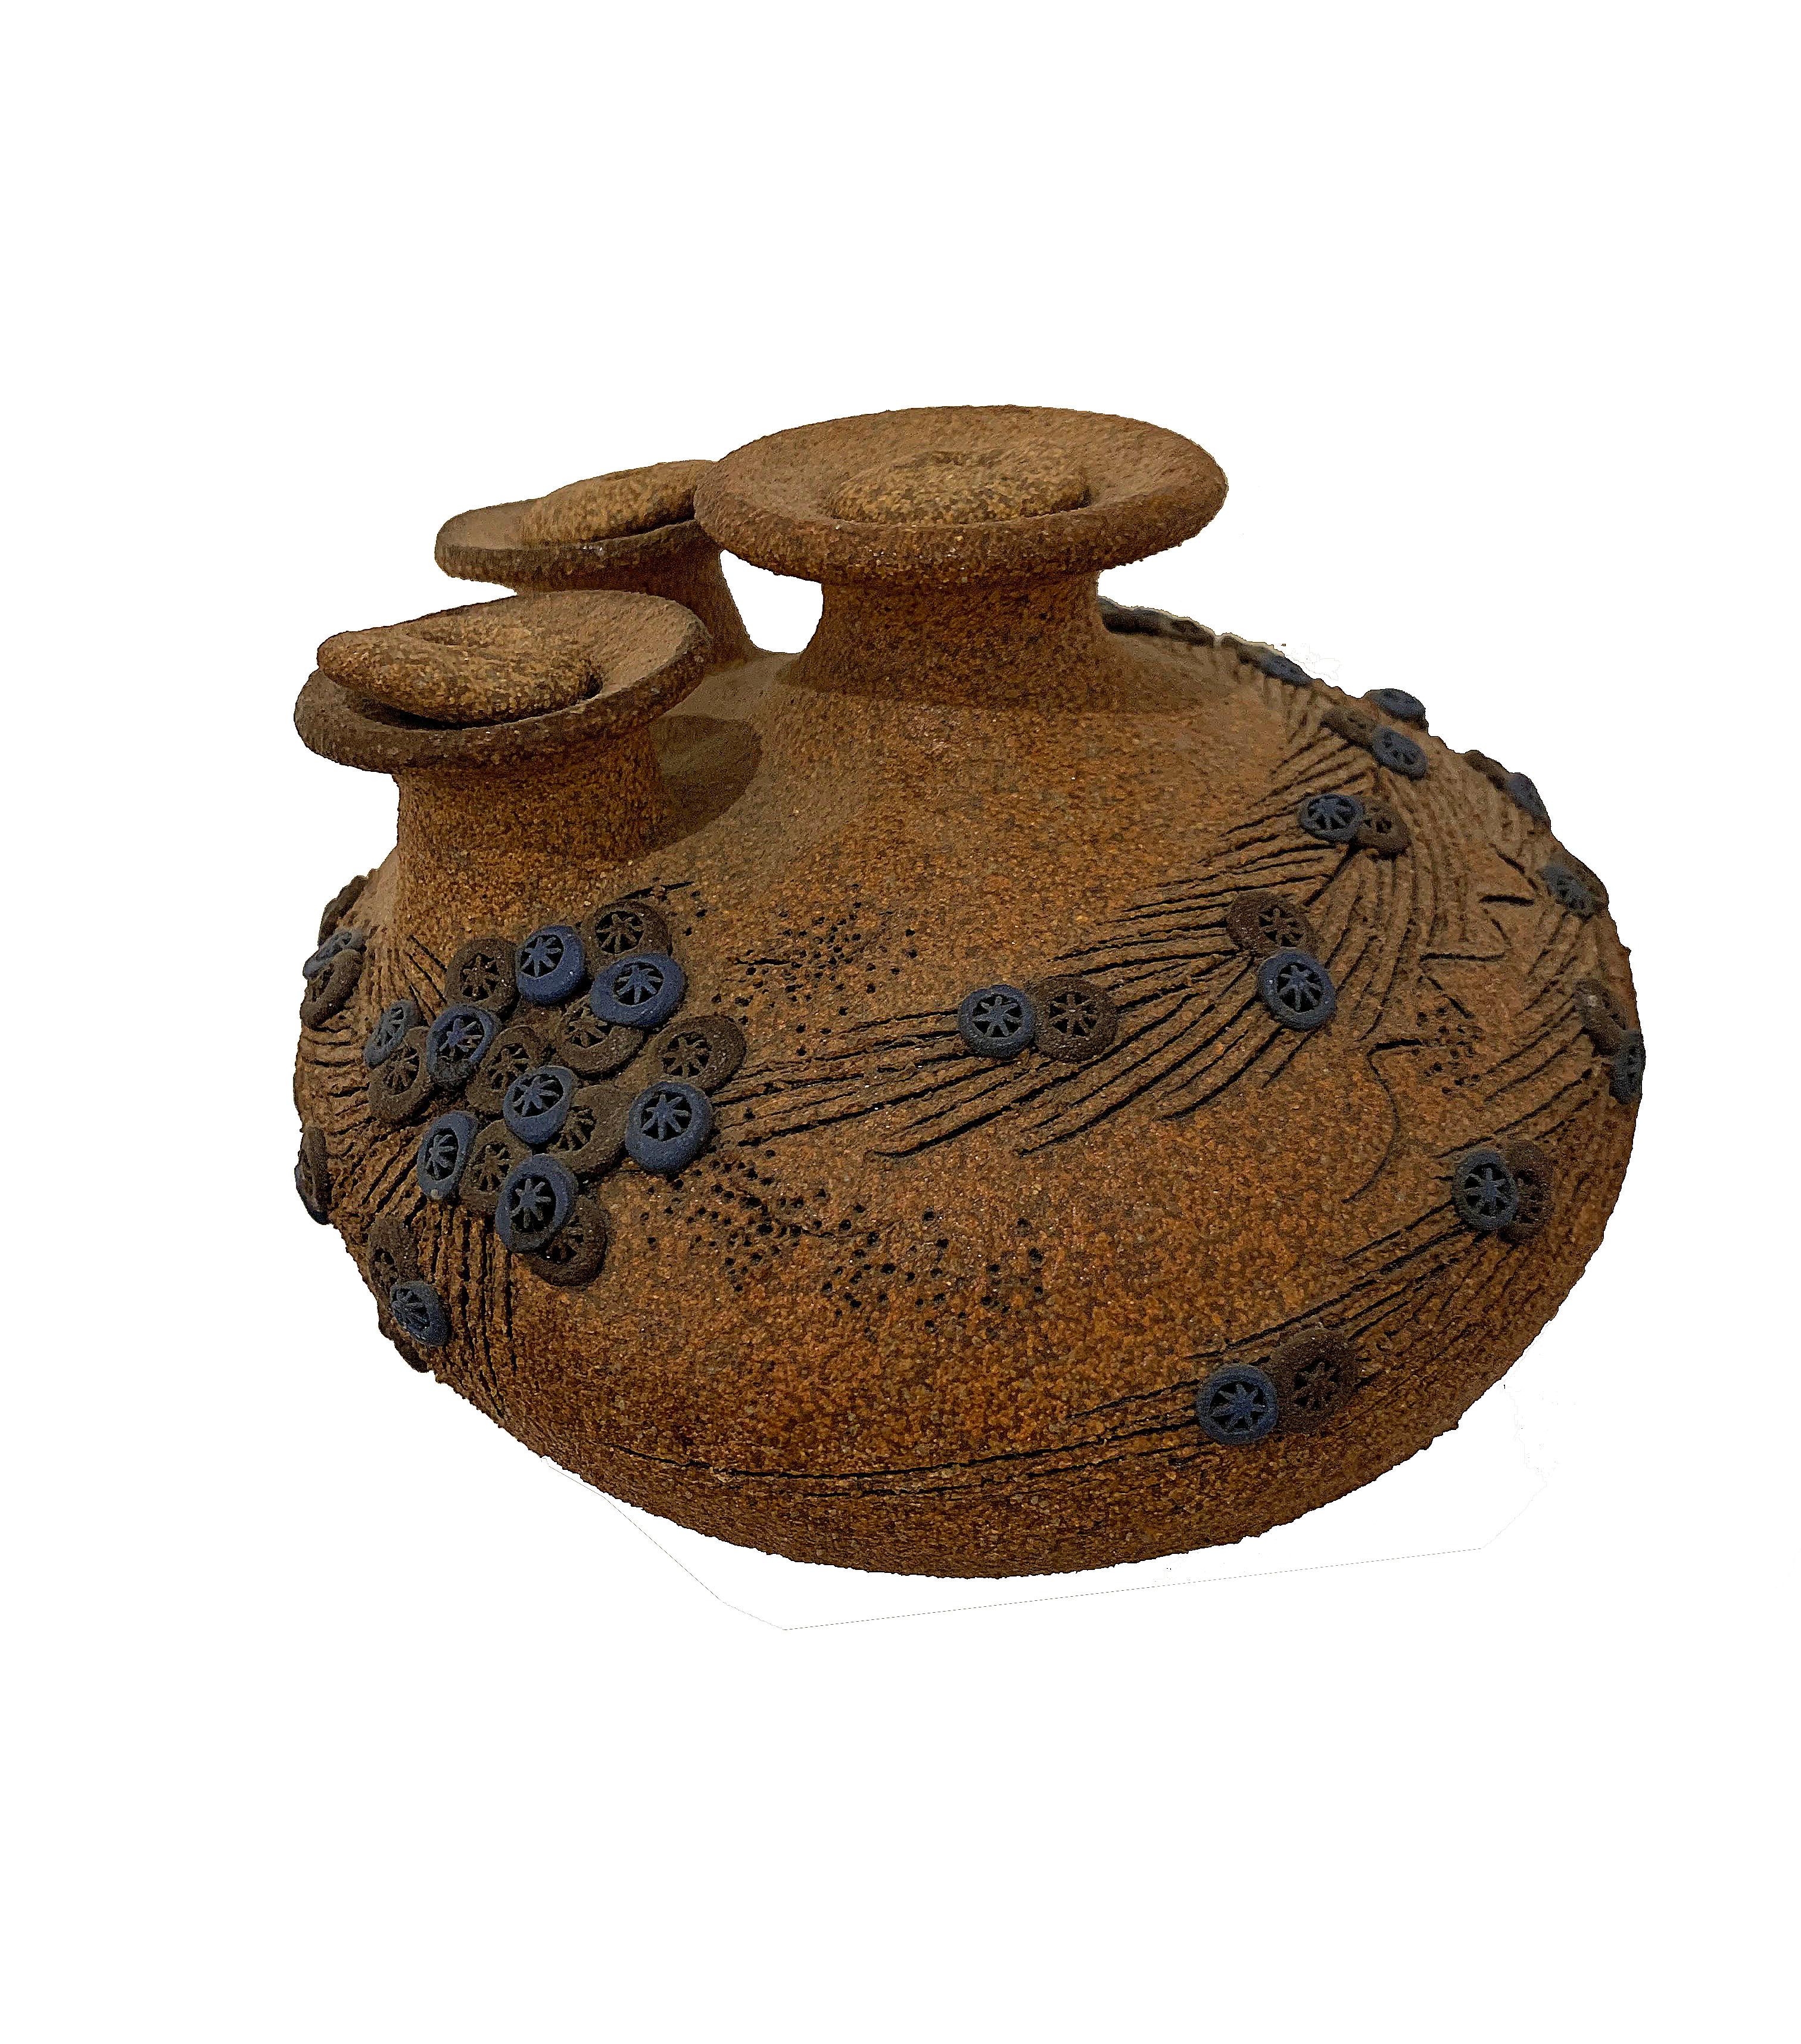 Lidded Ceramic Vase  - Sculpture by Unknown